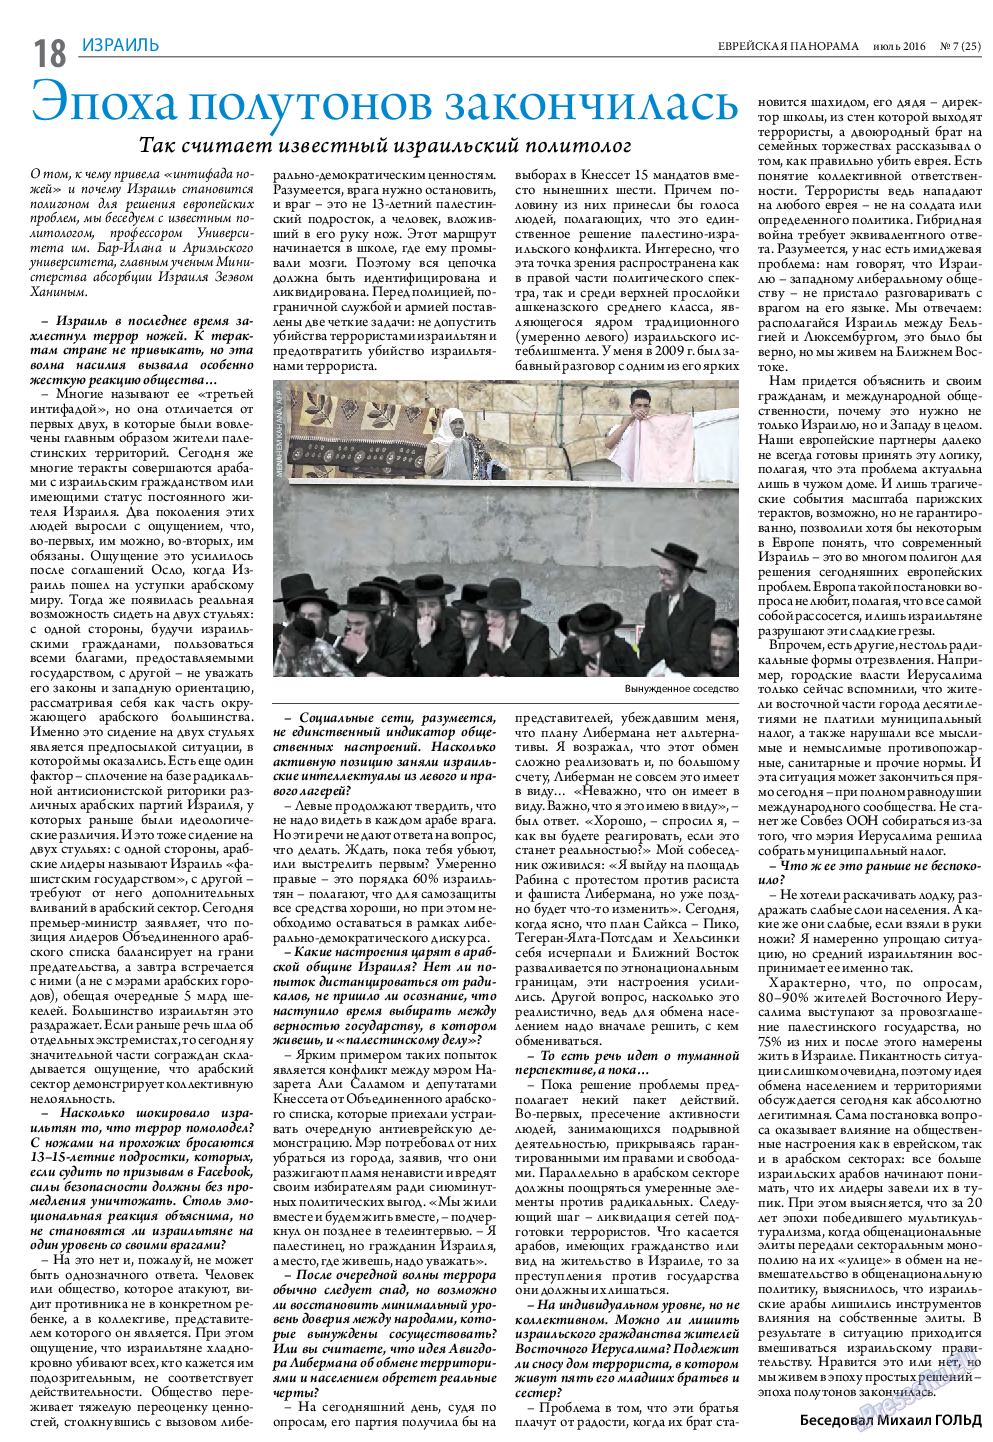 Еврейская панорама, газета. 2016 №7 стр.18